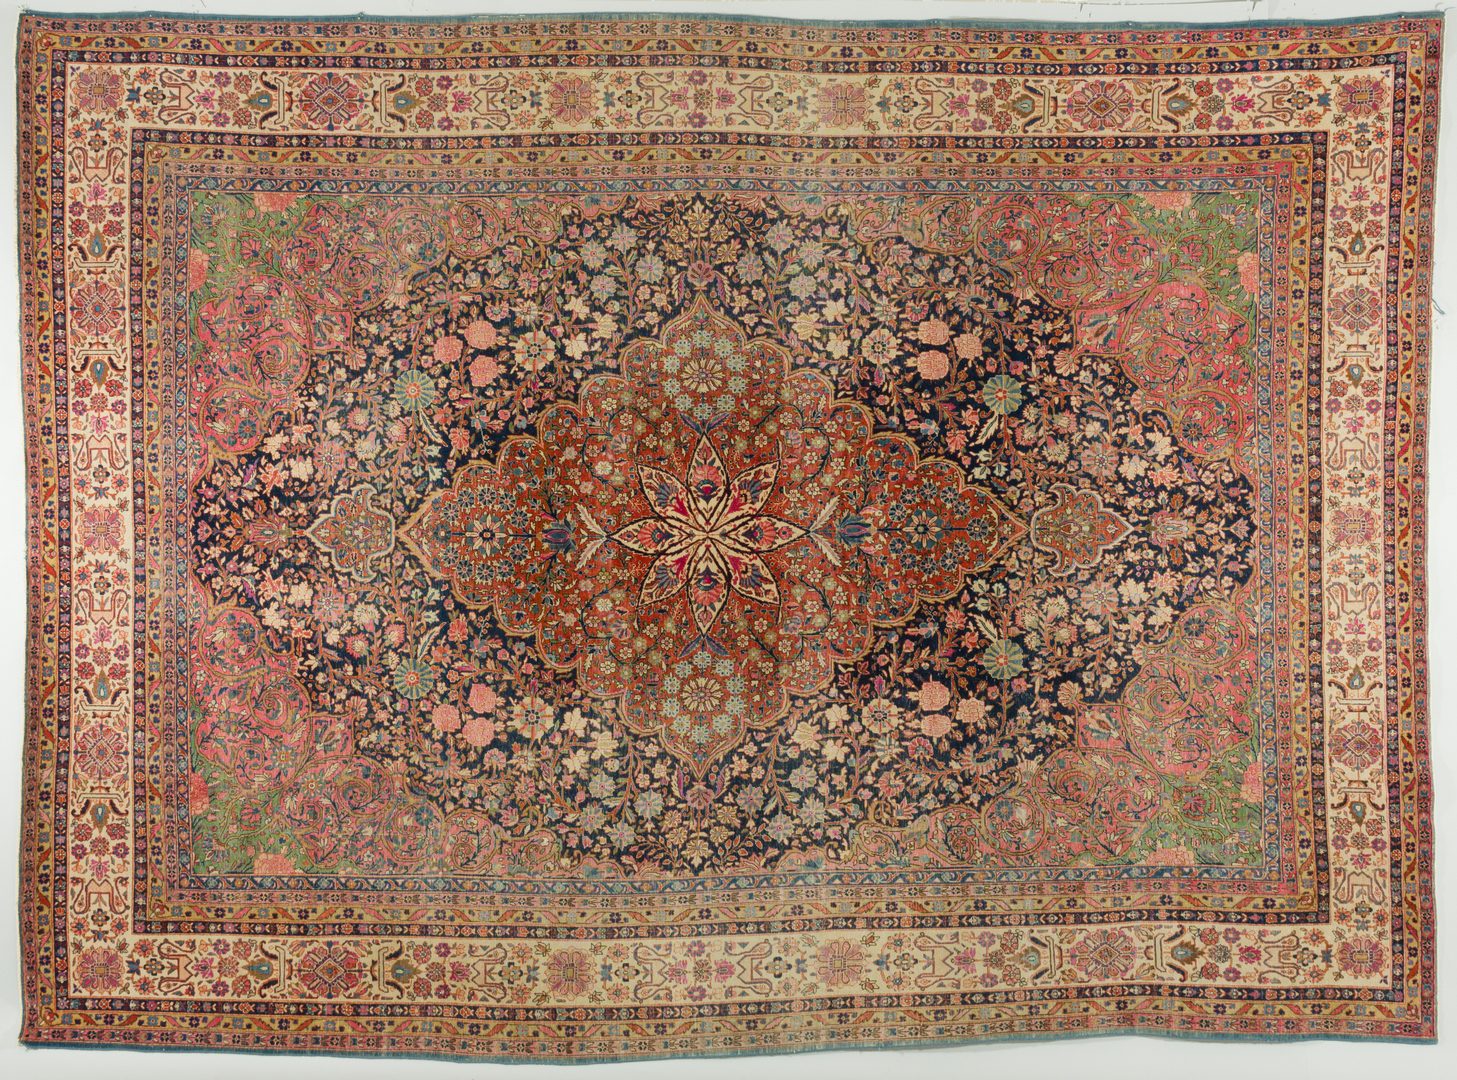 Lot 300: Antique Persian Kashan Carpet